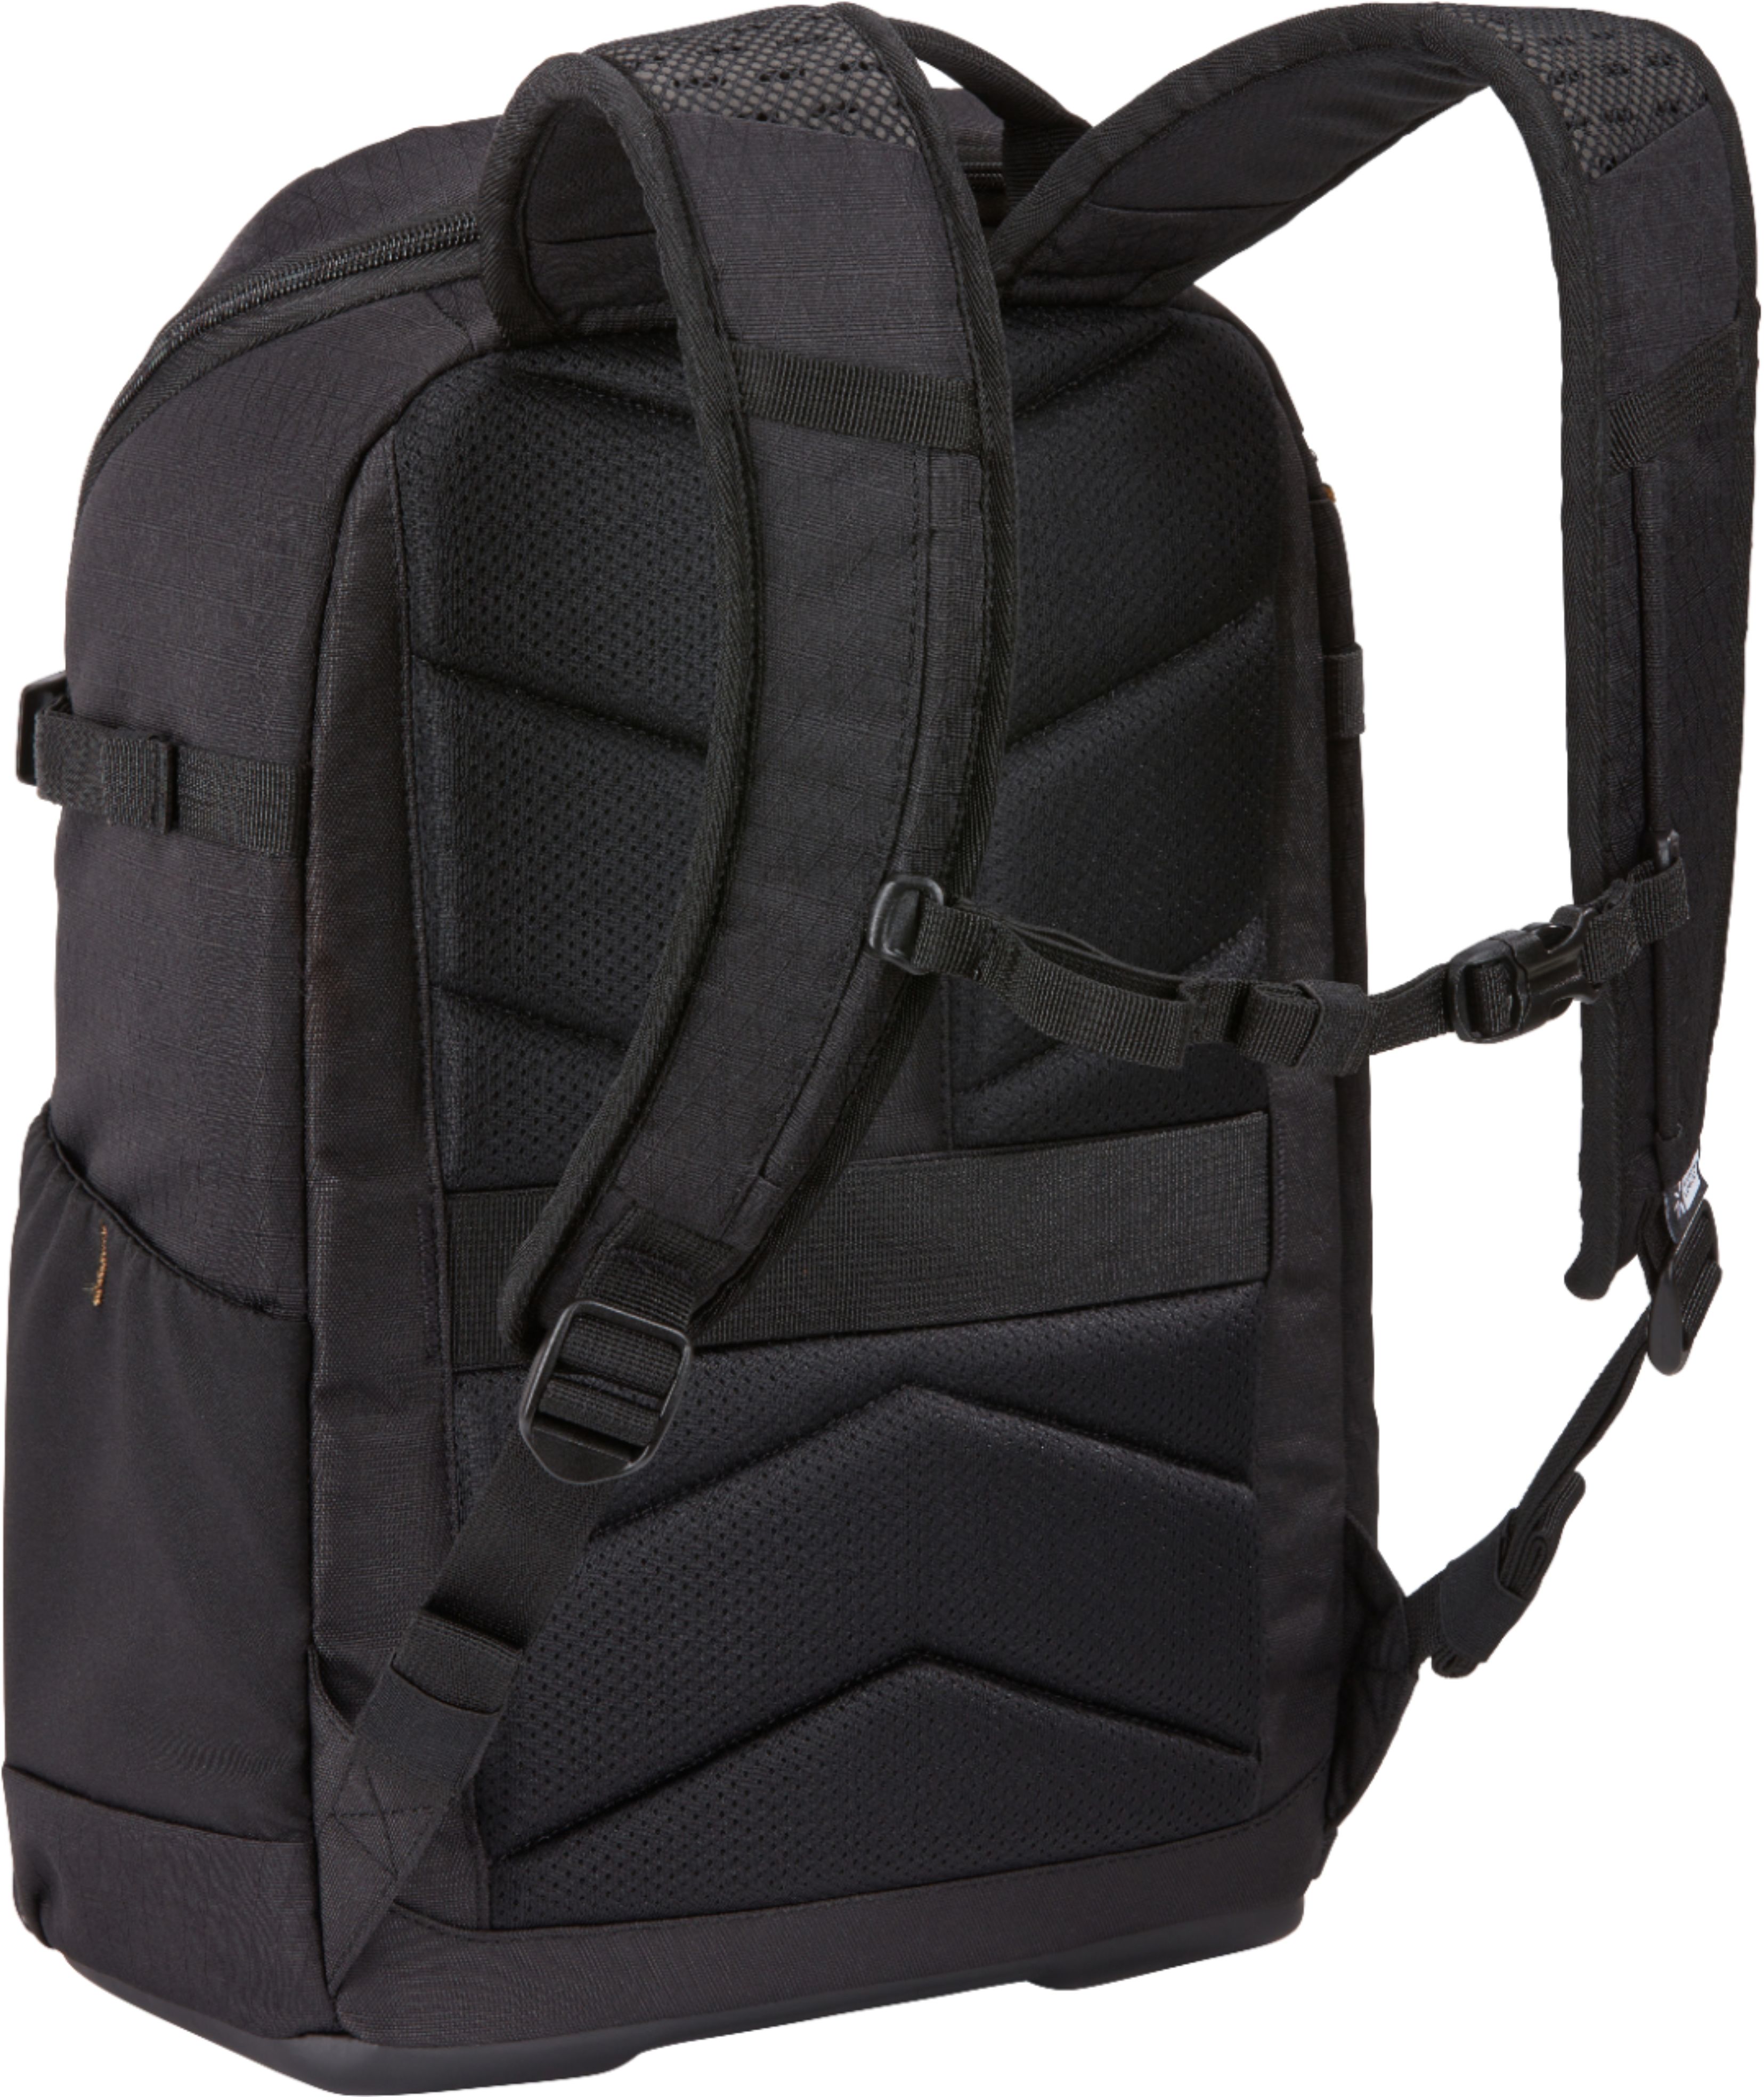 Lids St. Louis Cardinals MOJO 19'' Laptop Travel Backpack - Black